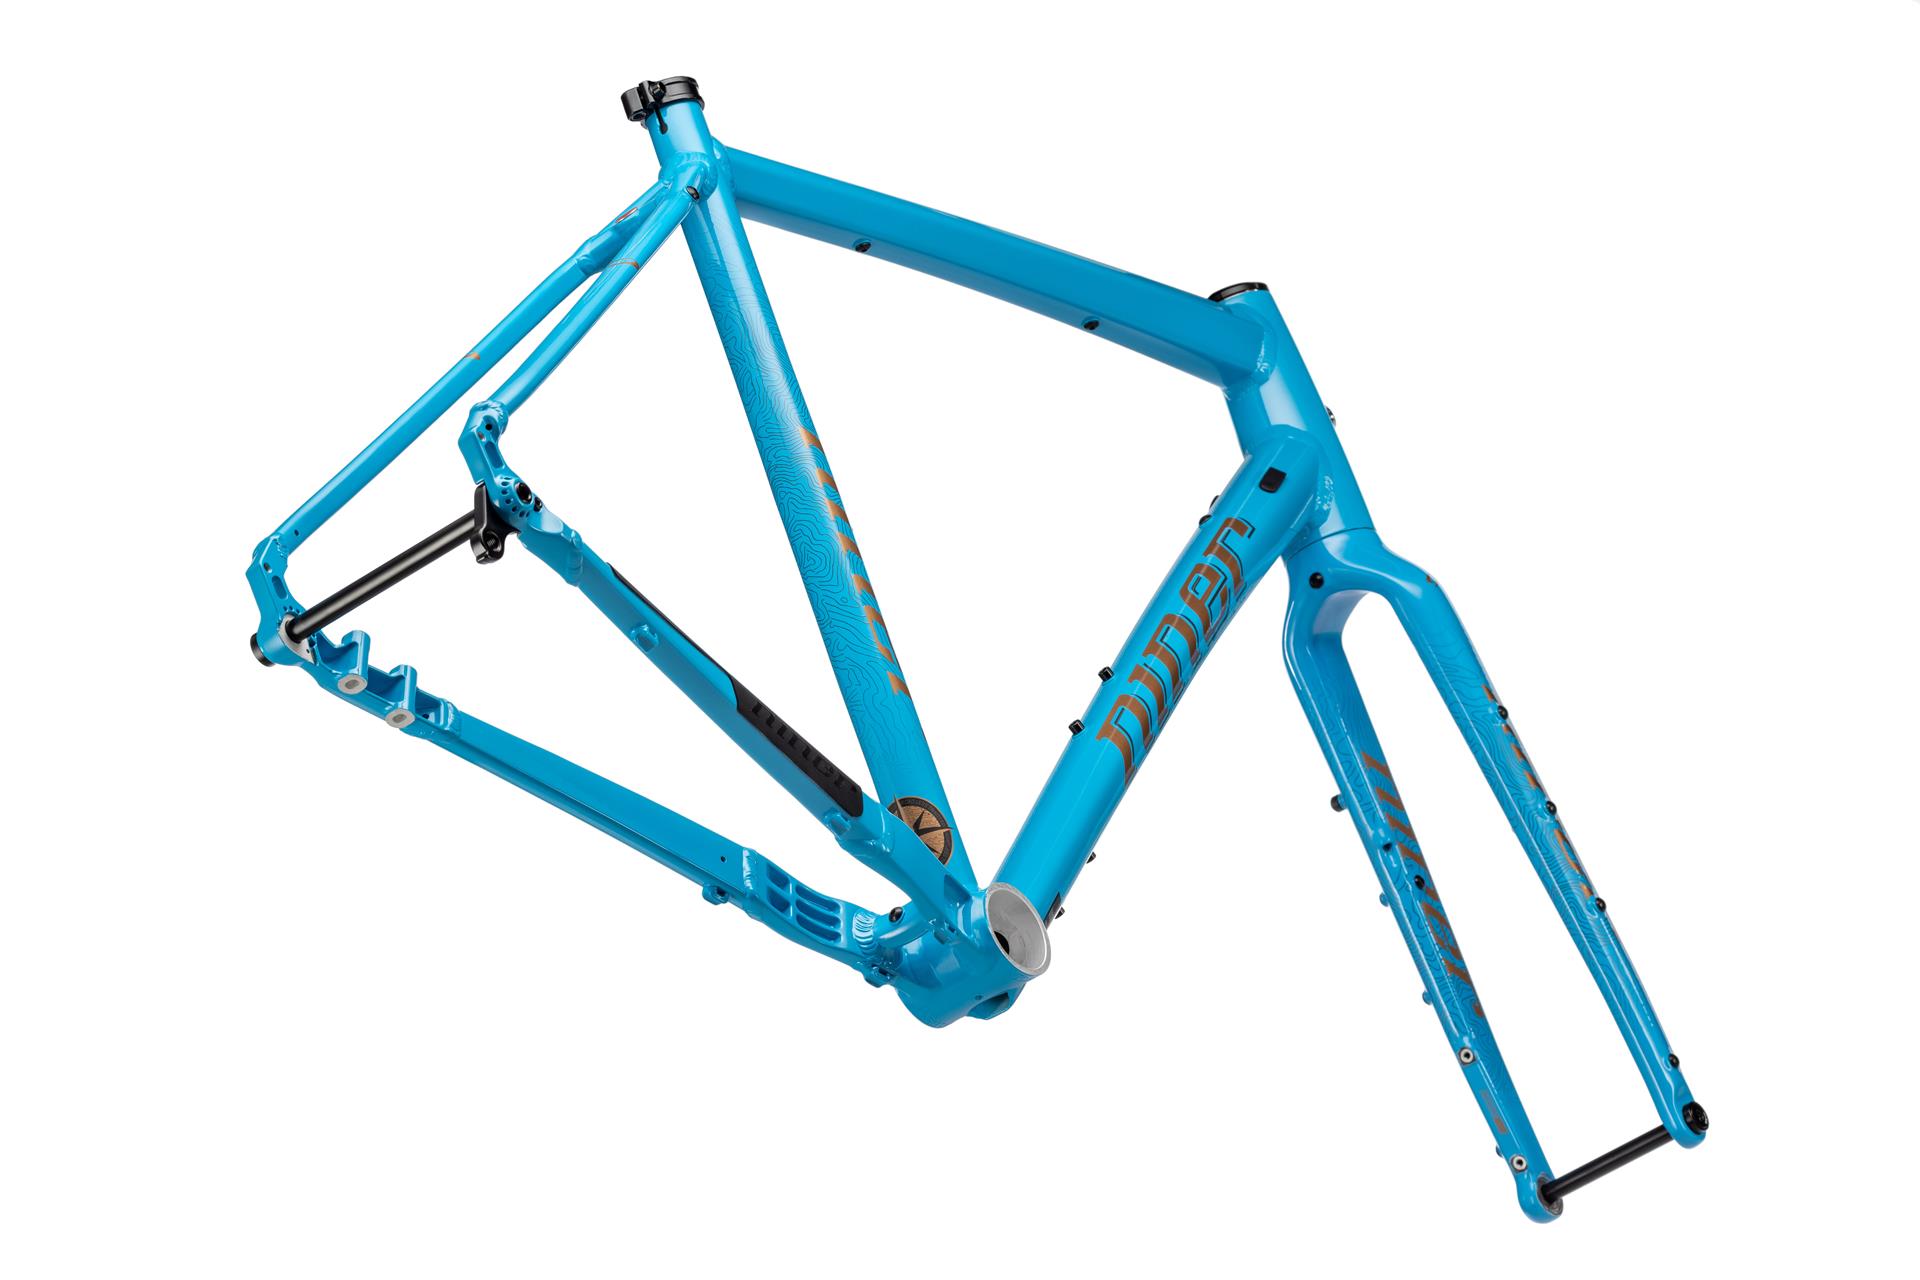 Niner RLT 3-star bike, Grey/Blue, 53